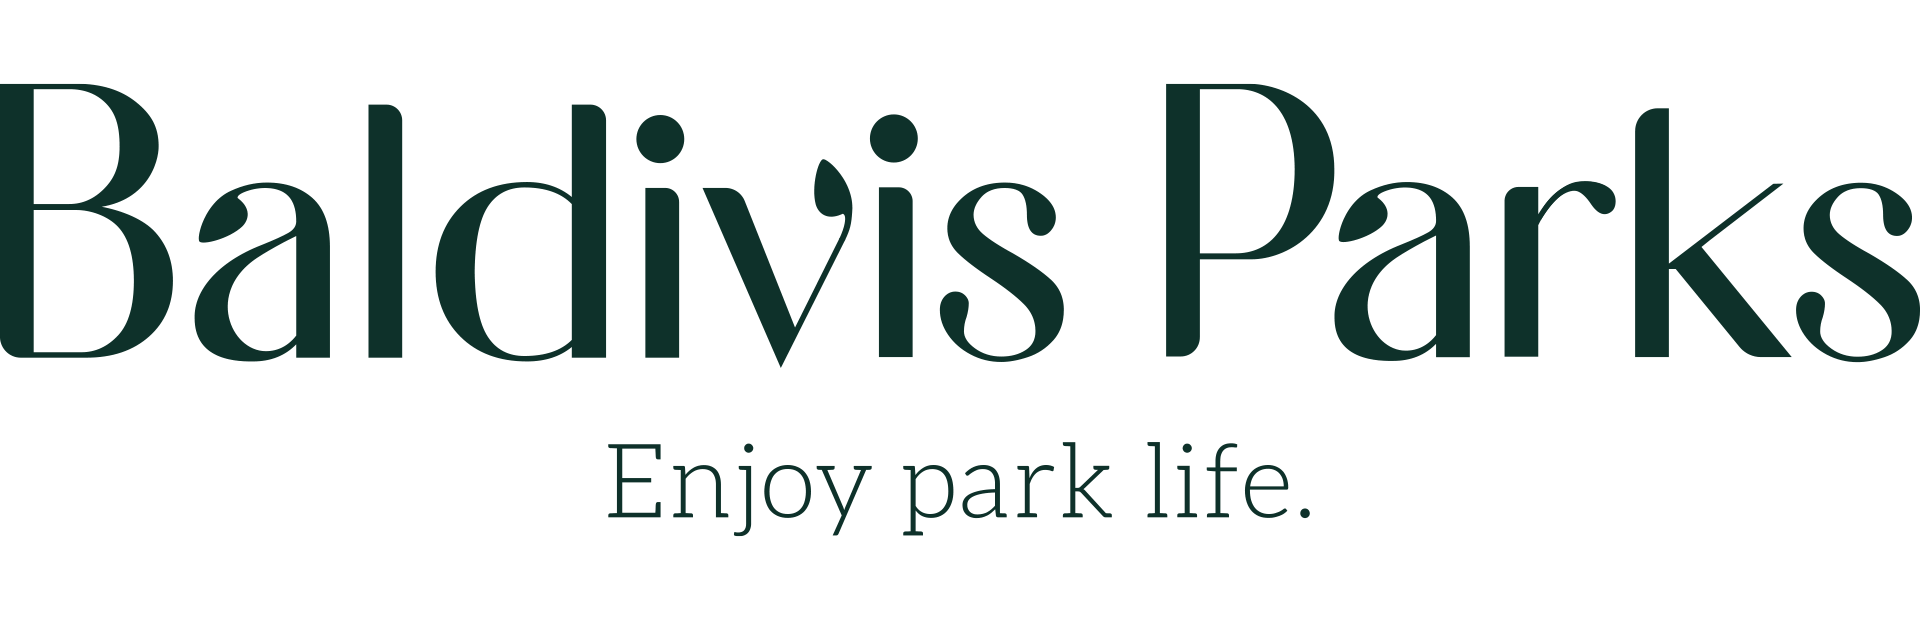 Baldivis Parks | Enjoy park life.